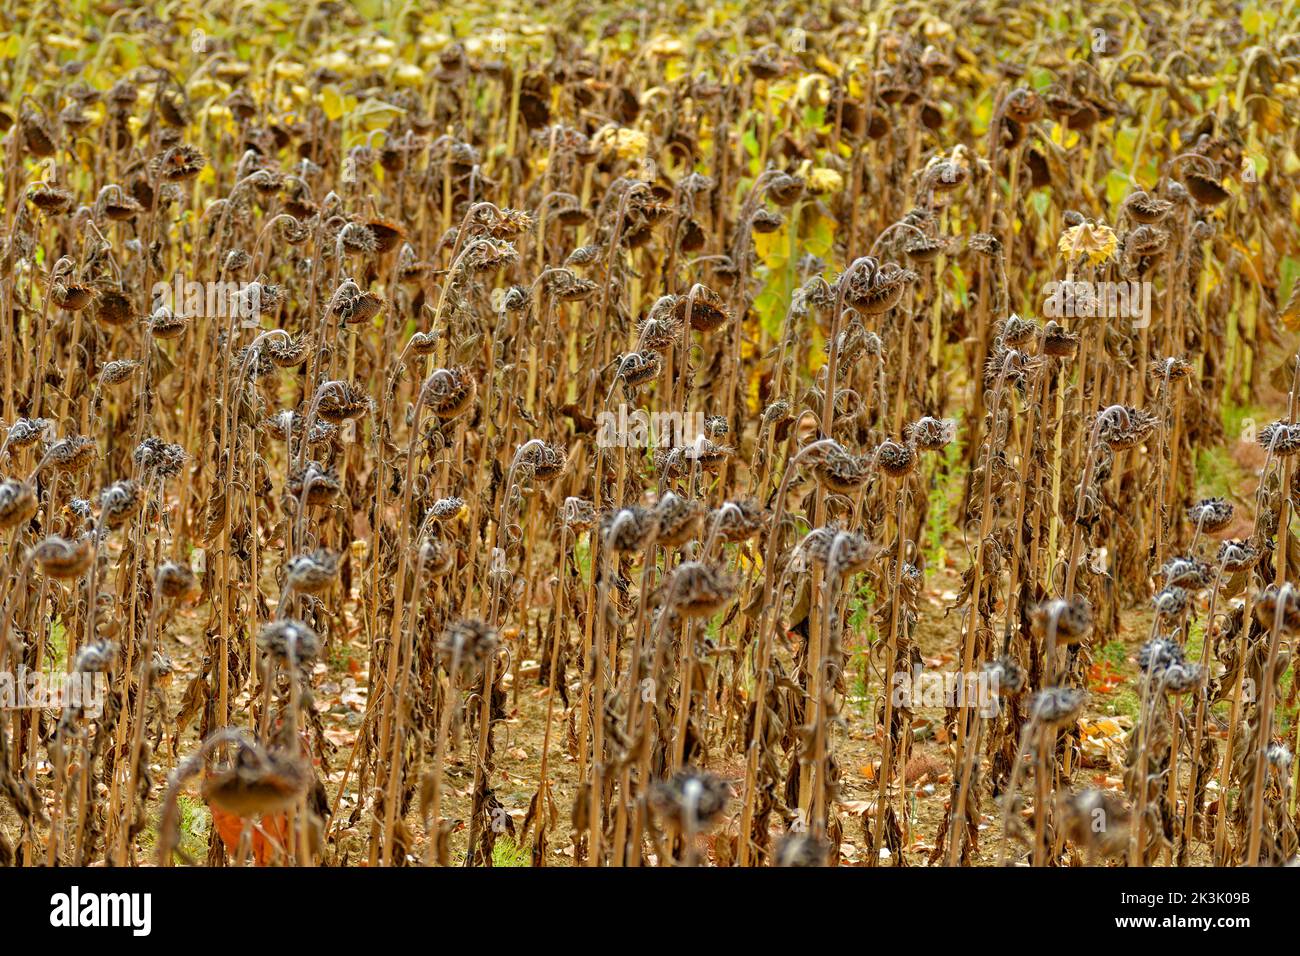 Girasole crop failure. Dovuto a siccità. Foto Stock